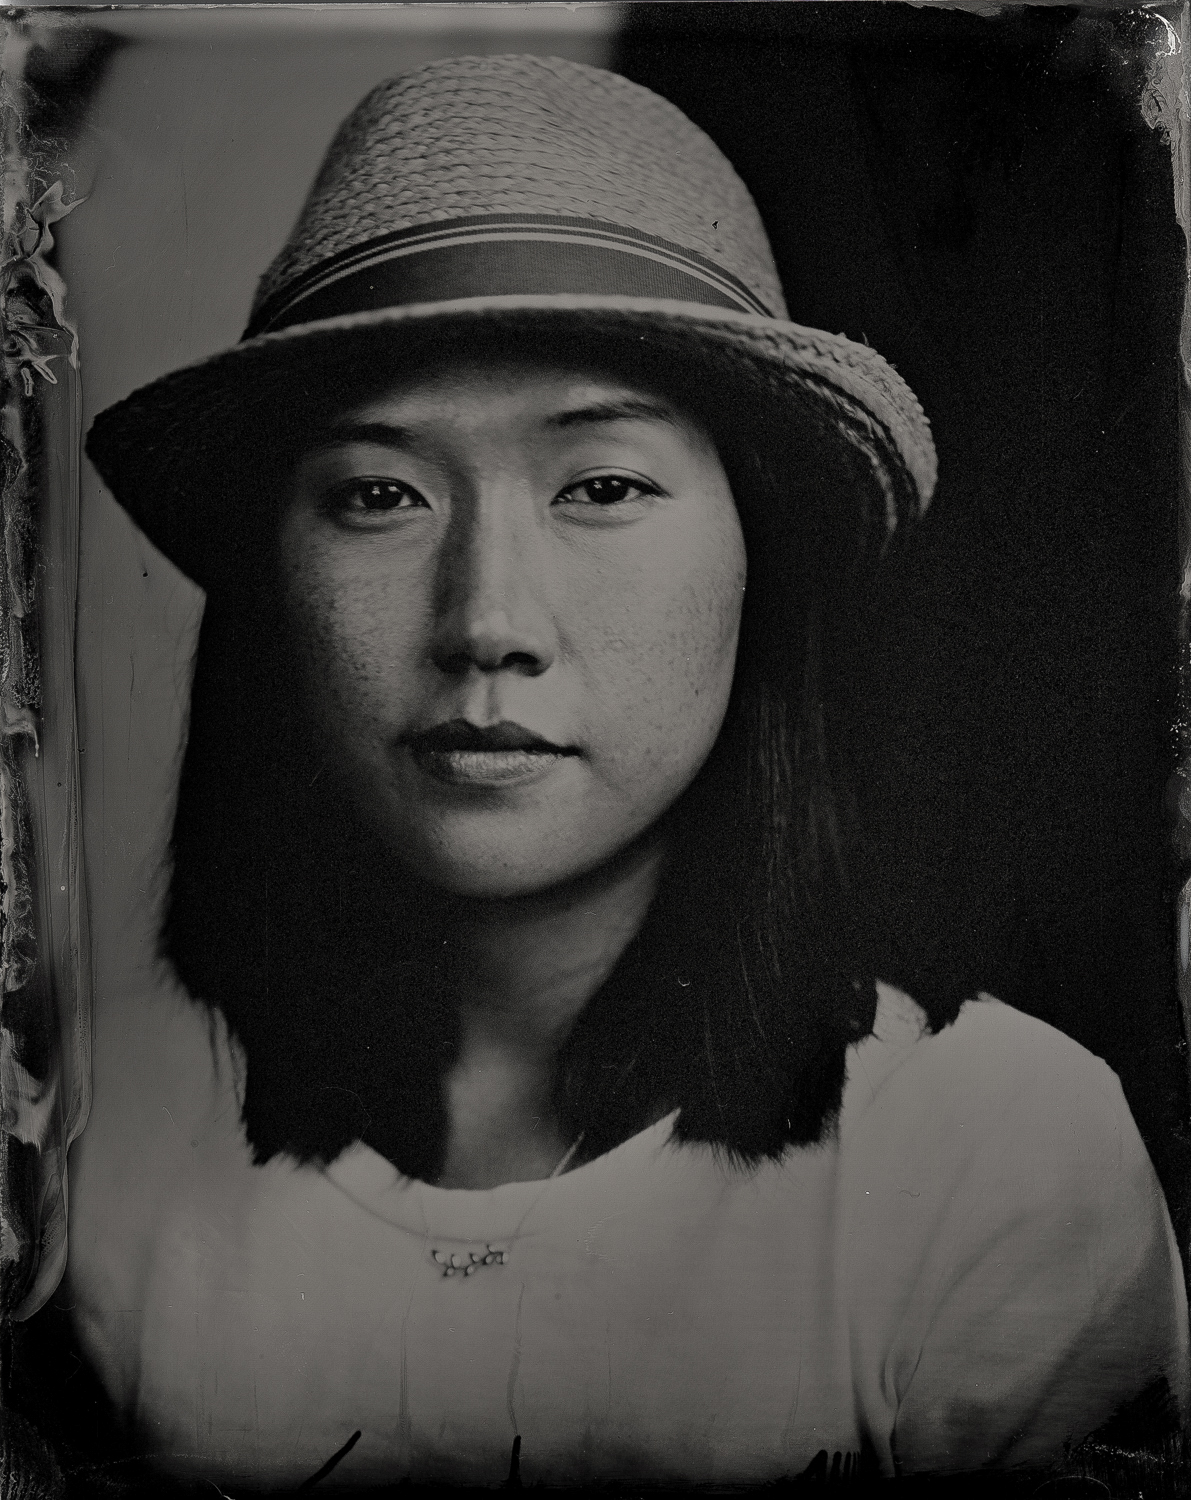 tintype portrait Portraiture art black and white wet collodion process